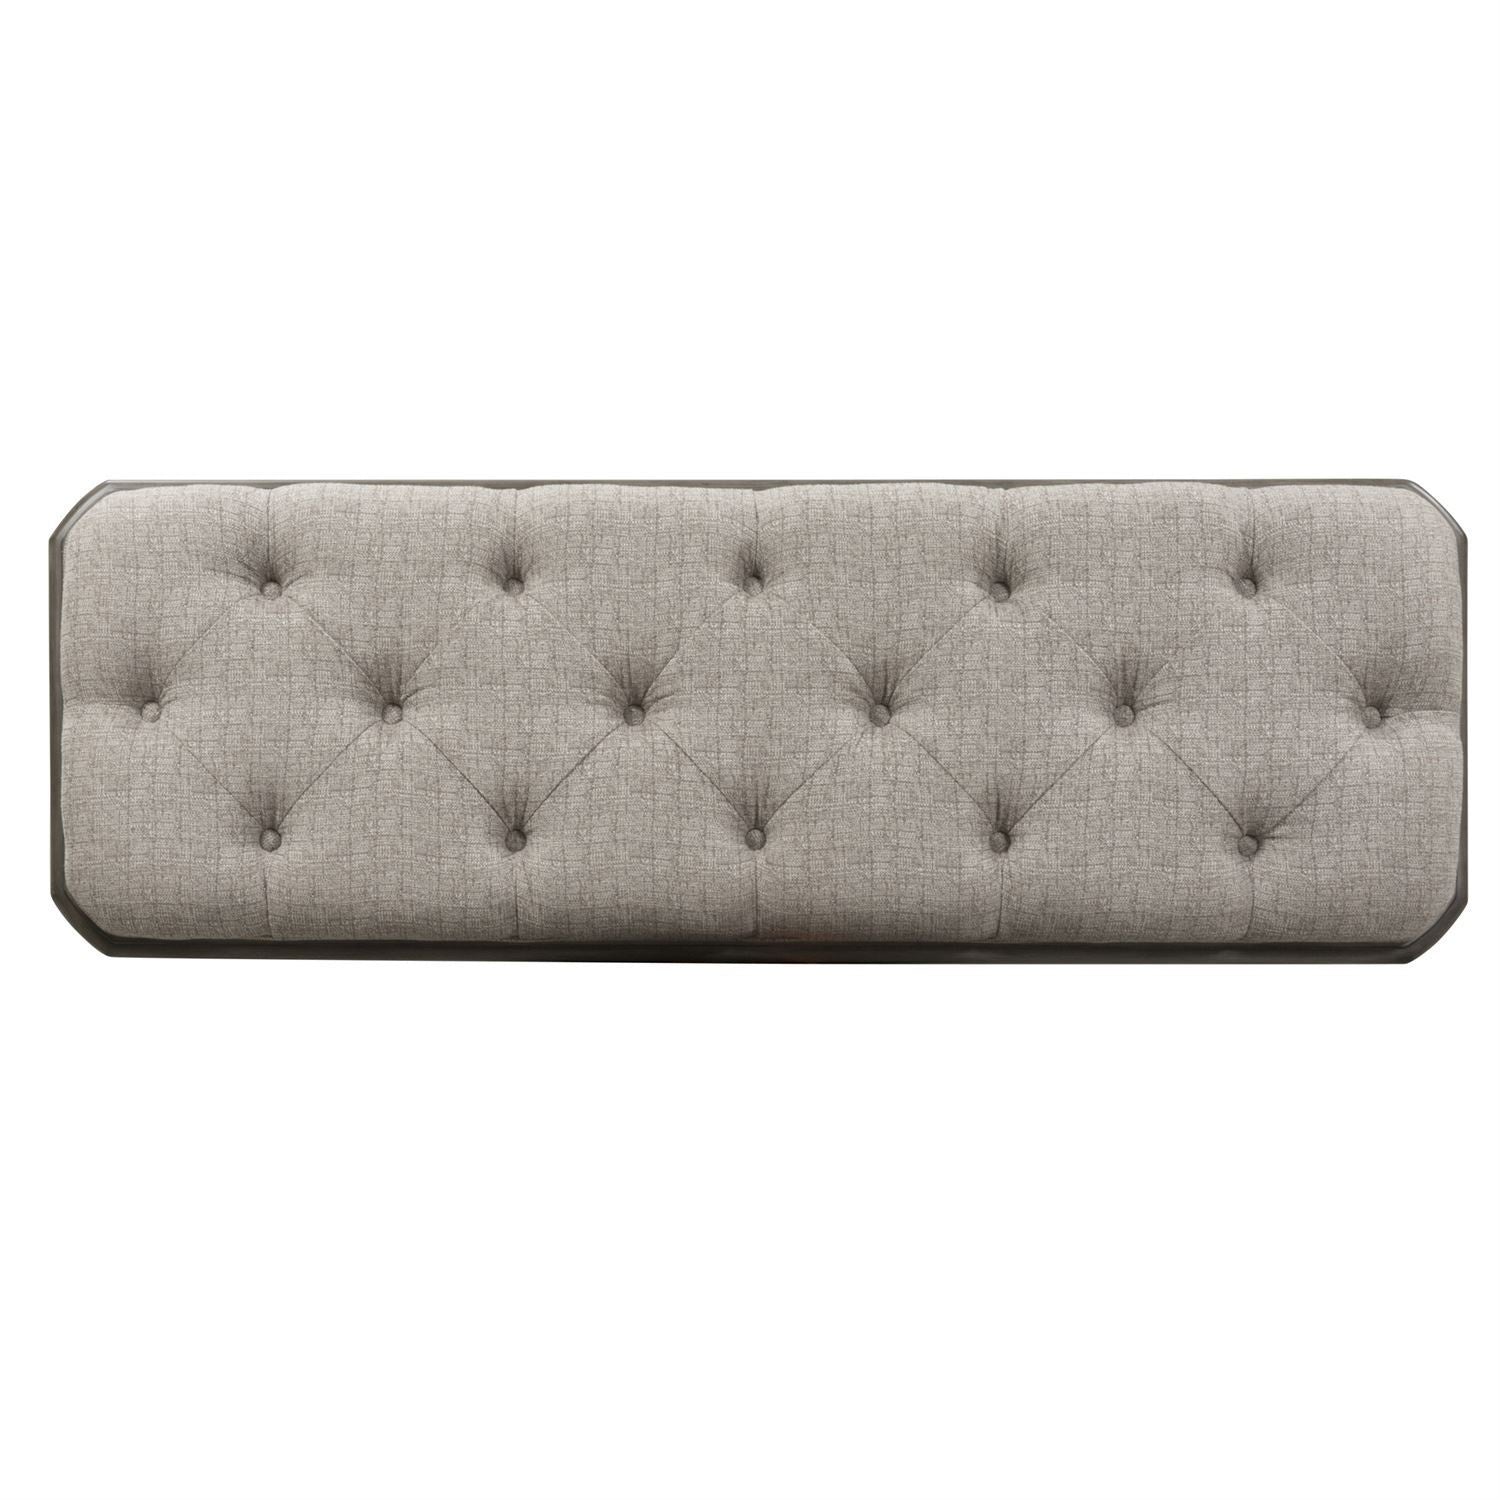 Magnolia Manor Bed Bench – Sigman-Mills Furniture